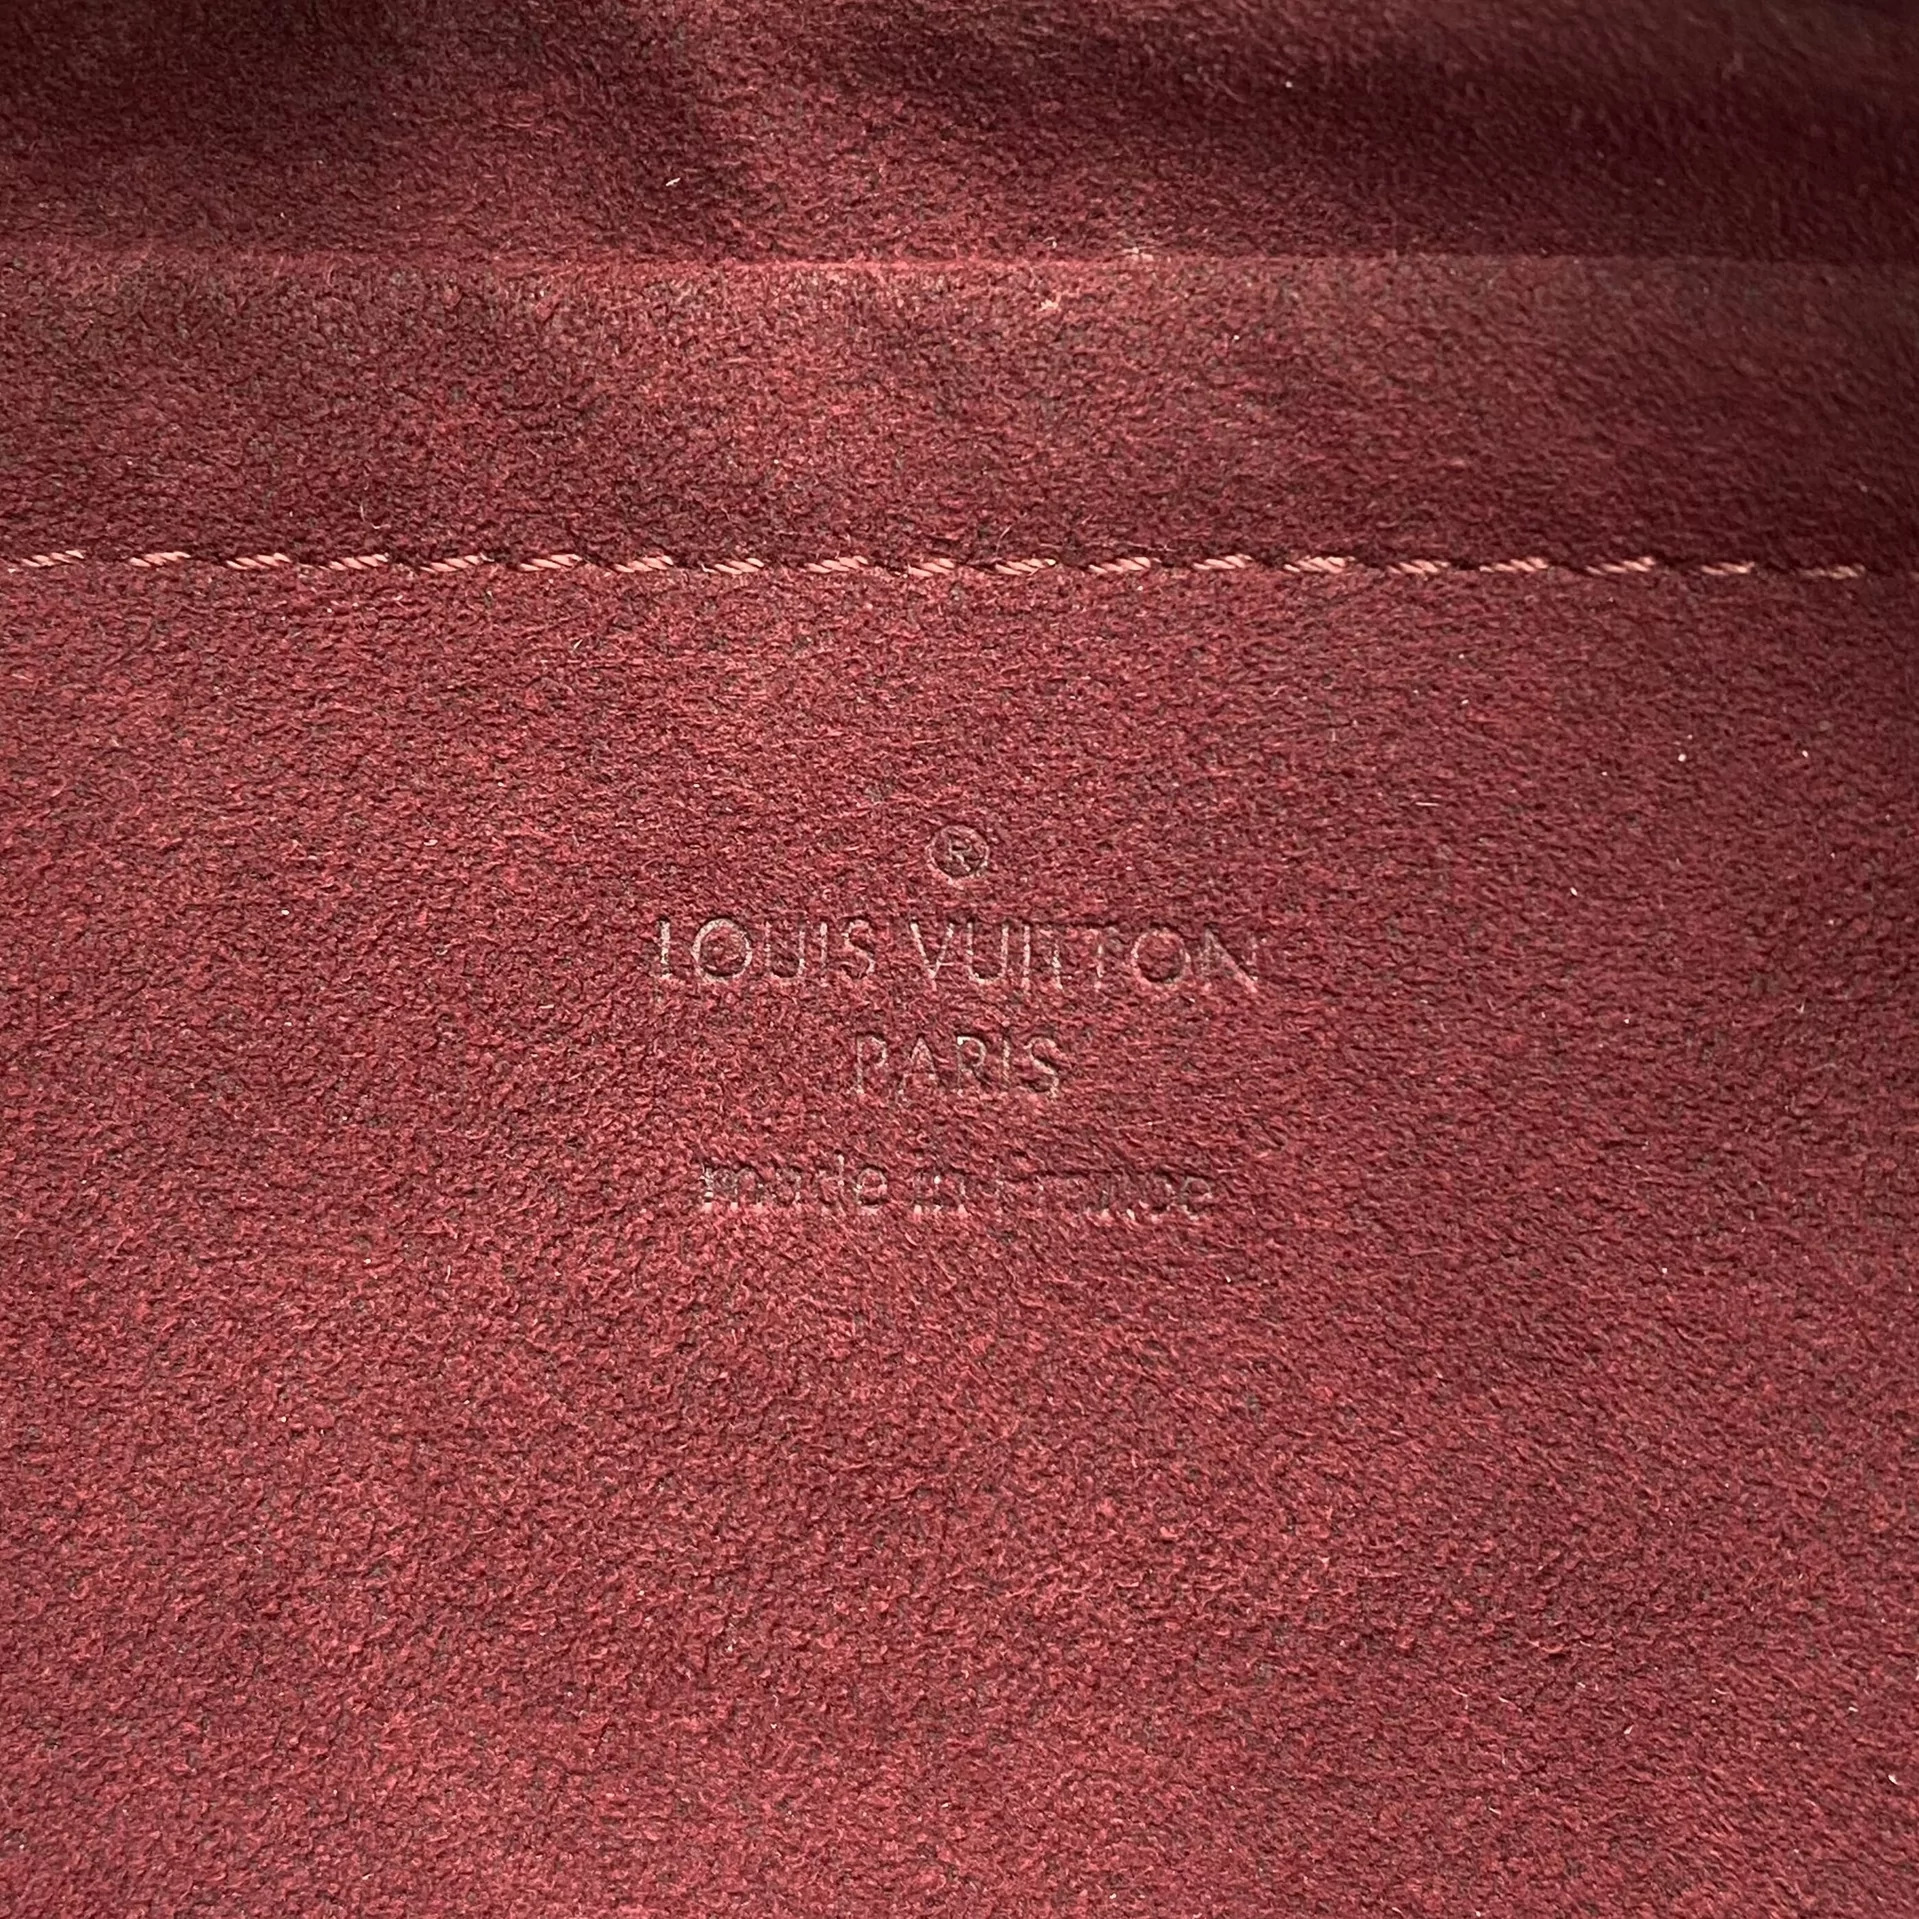 Bolsa Louis Vuitton Milla MM Edição Limitada